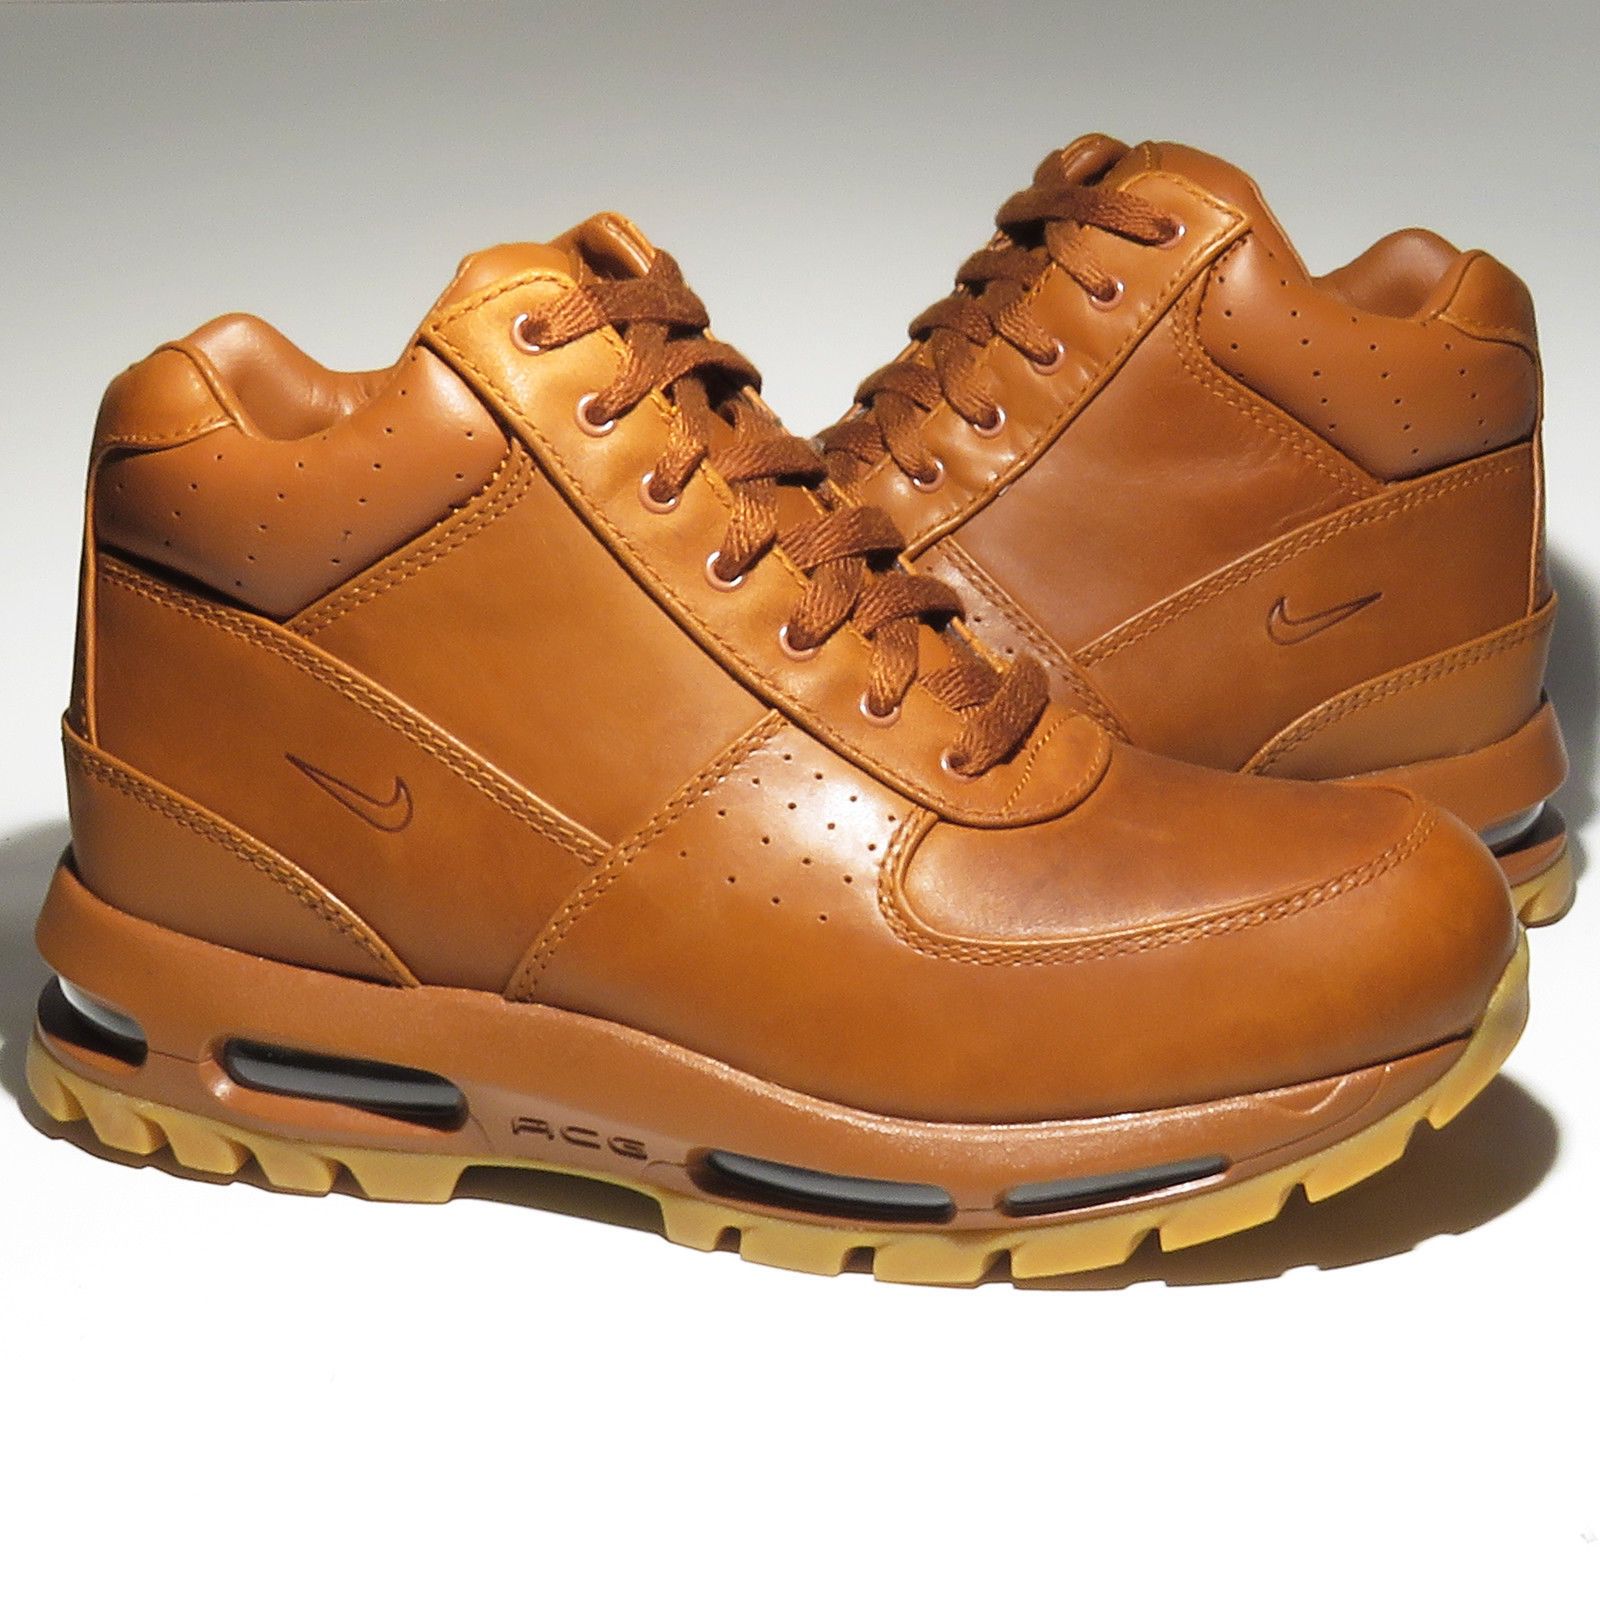 Nike Goadome Tawny brown leather boots 7.5